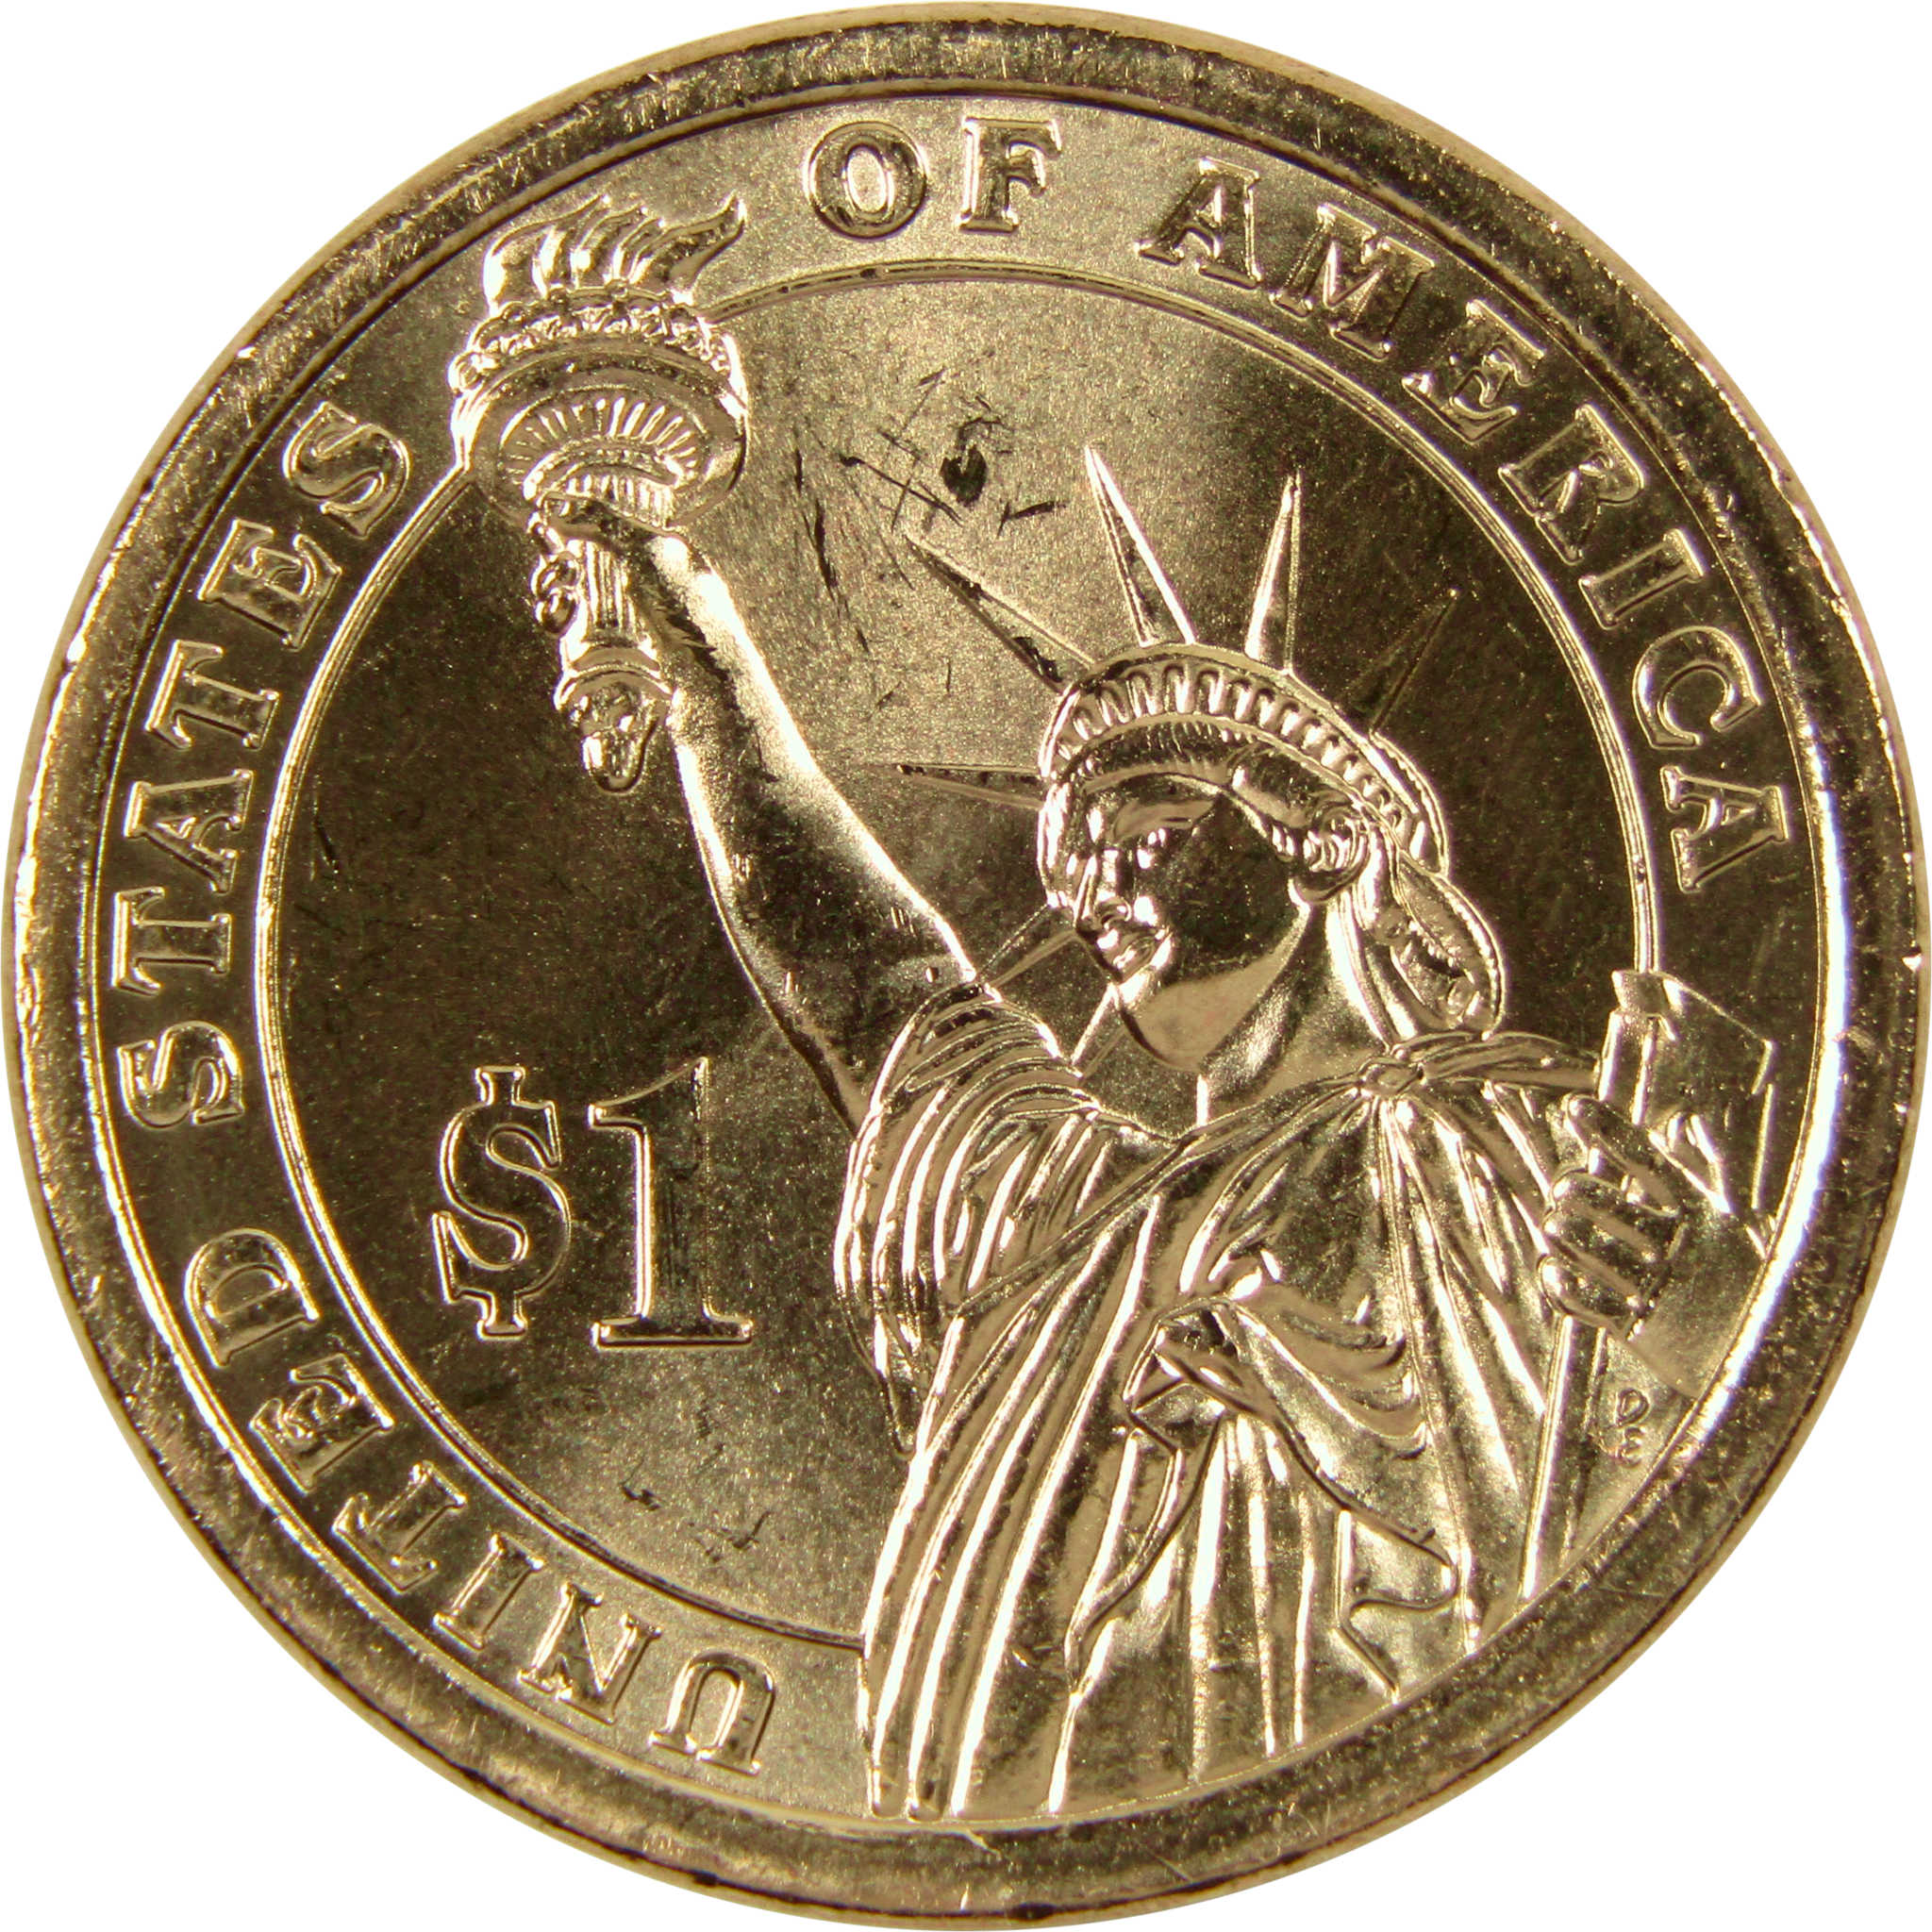 2010 P Abraham Lincoln Presidential Dollar BU Uncirculated $1 Coin